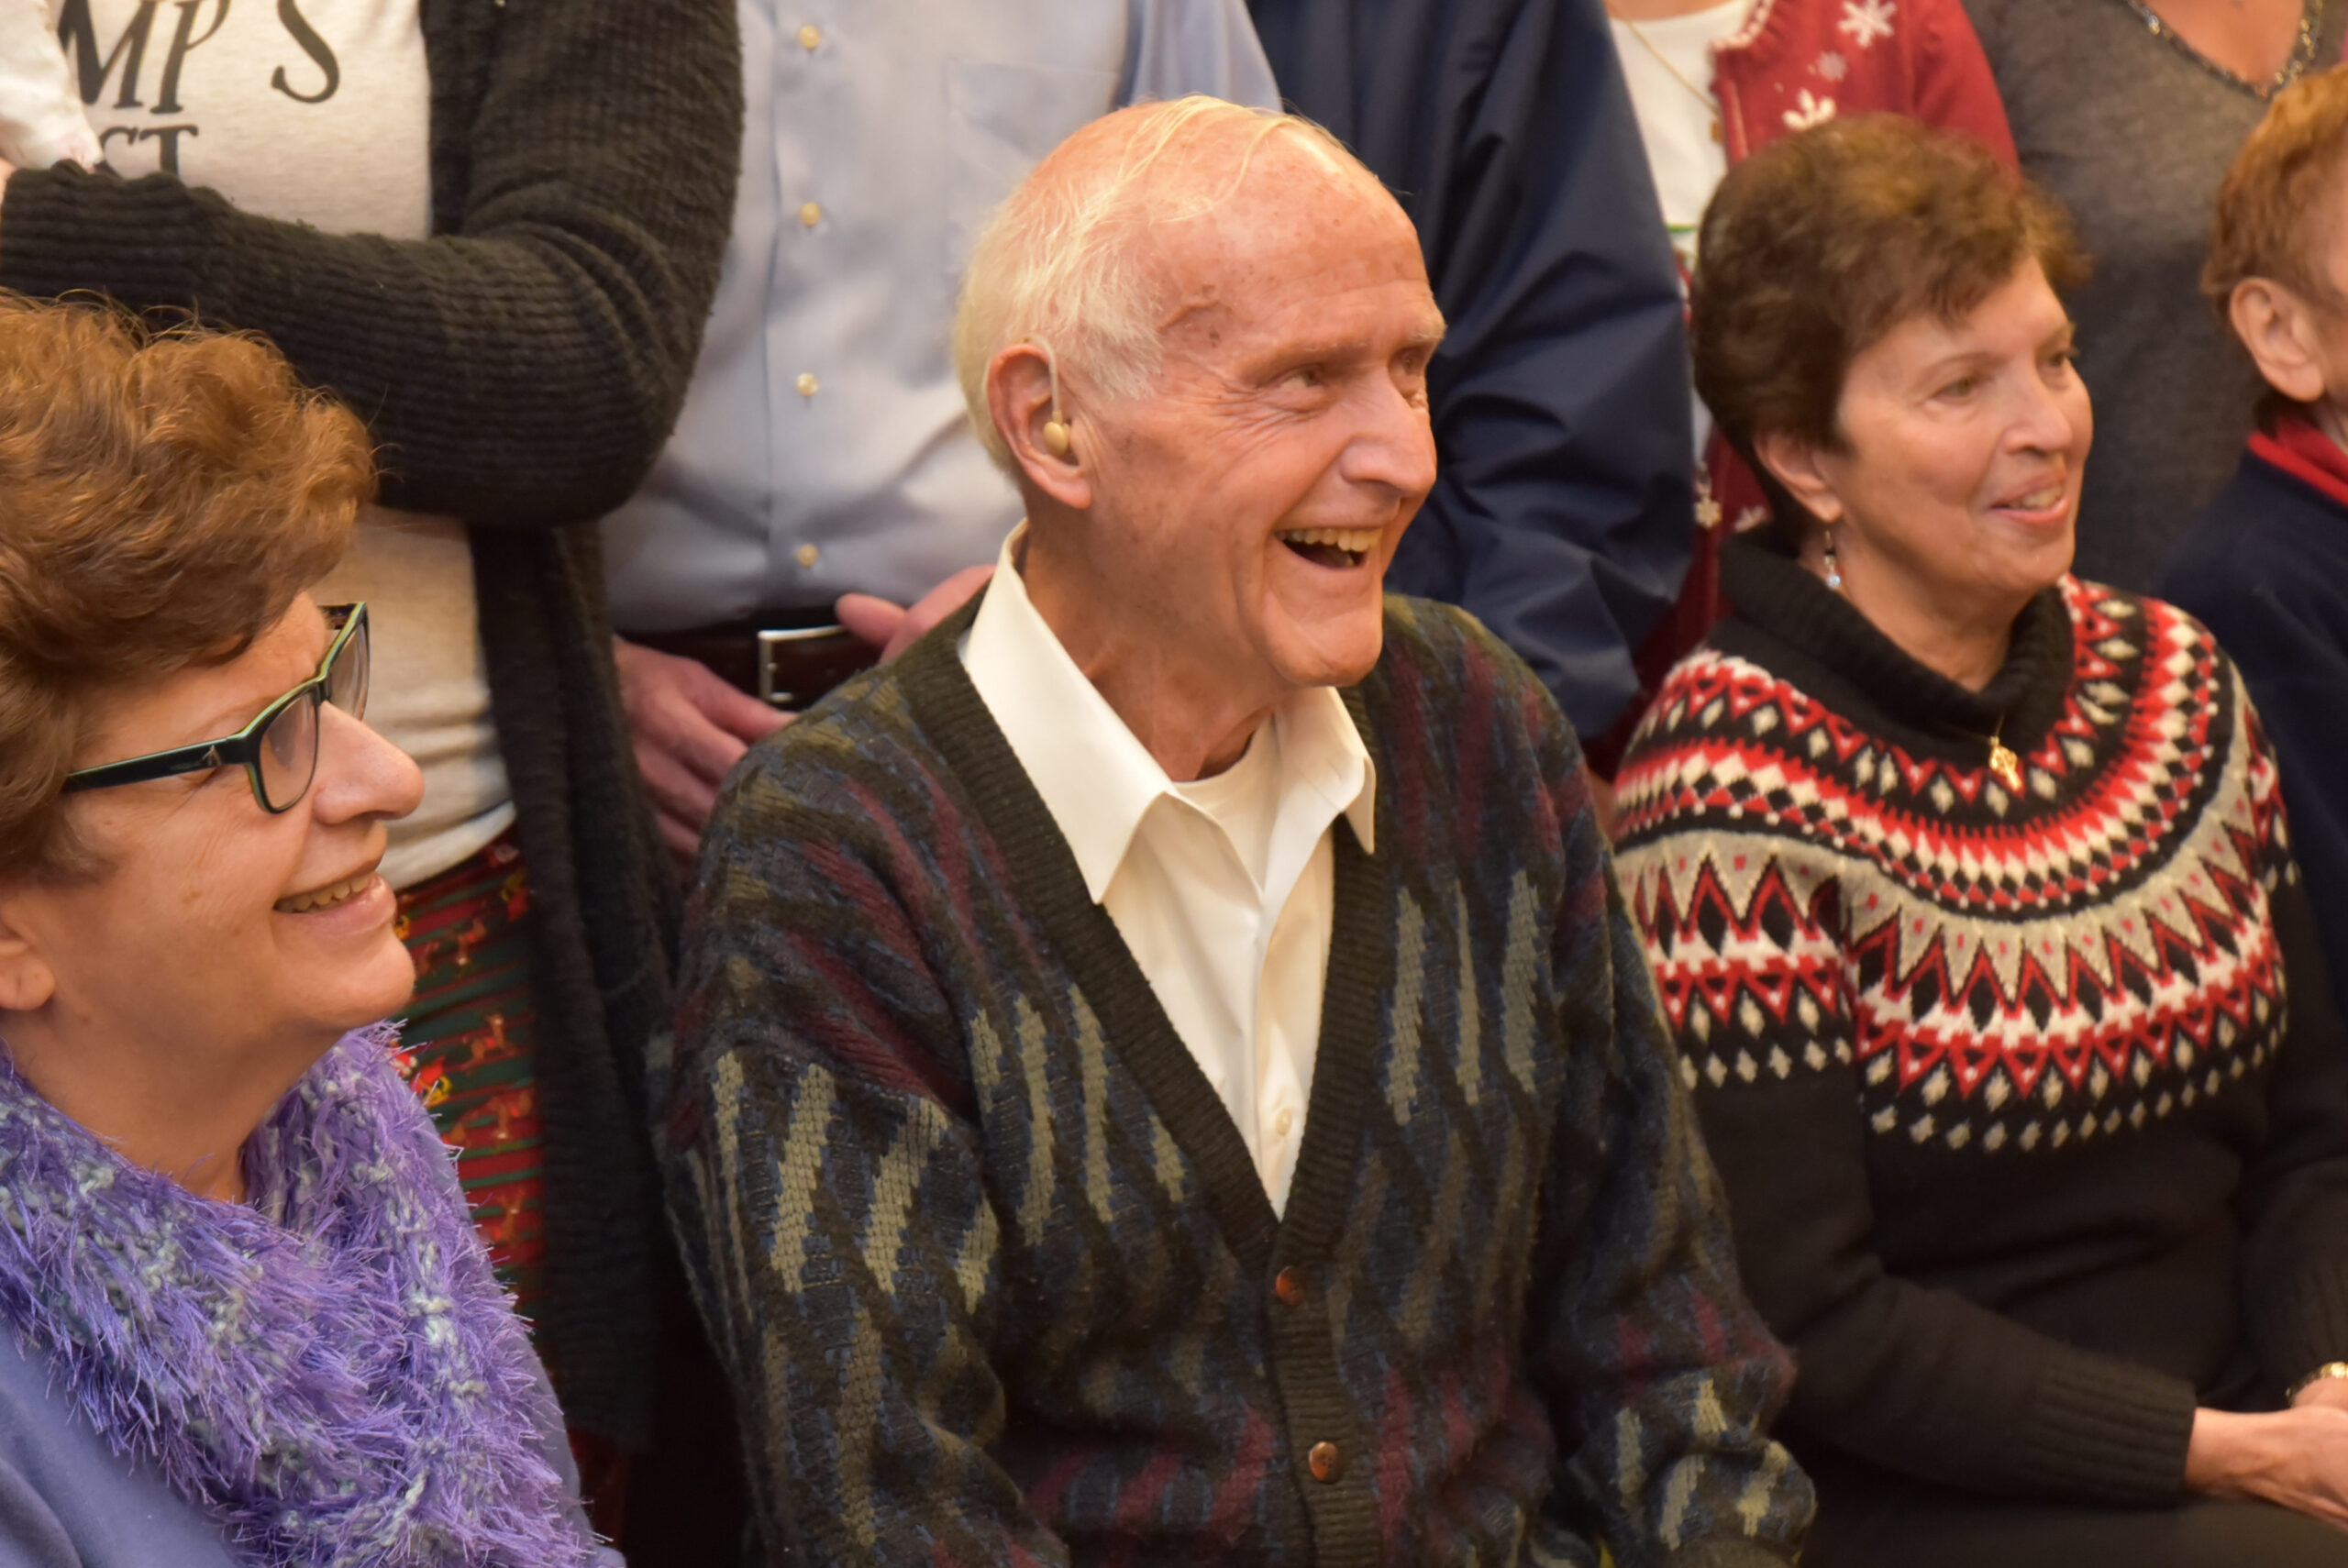 An elderly man seated at an event